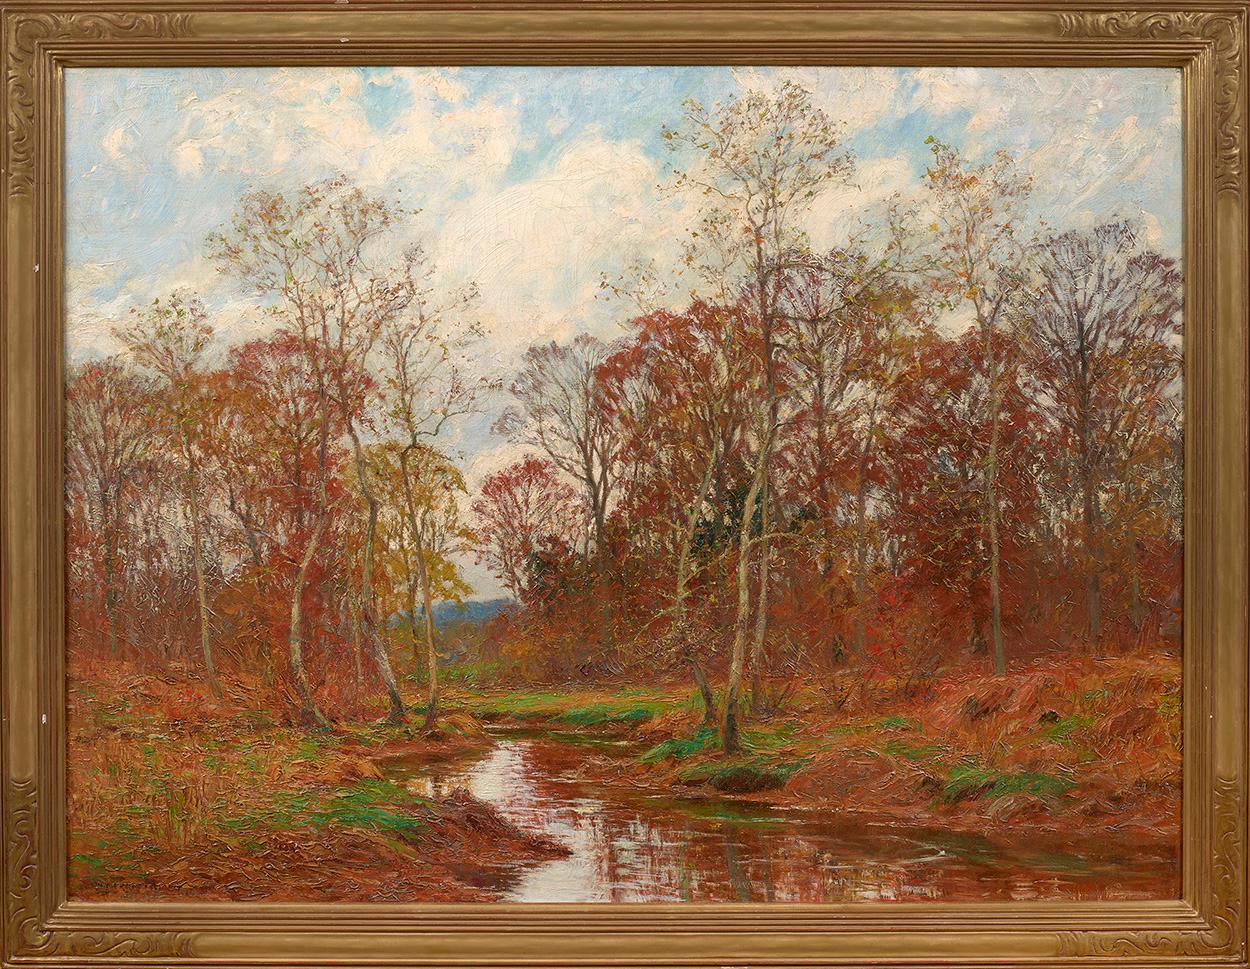 River Landscape, Autumn  - Painting by William Merritt Post